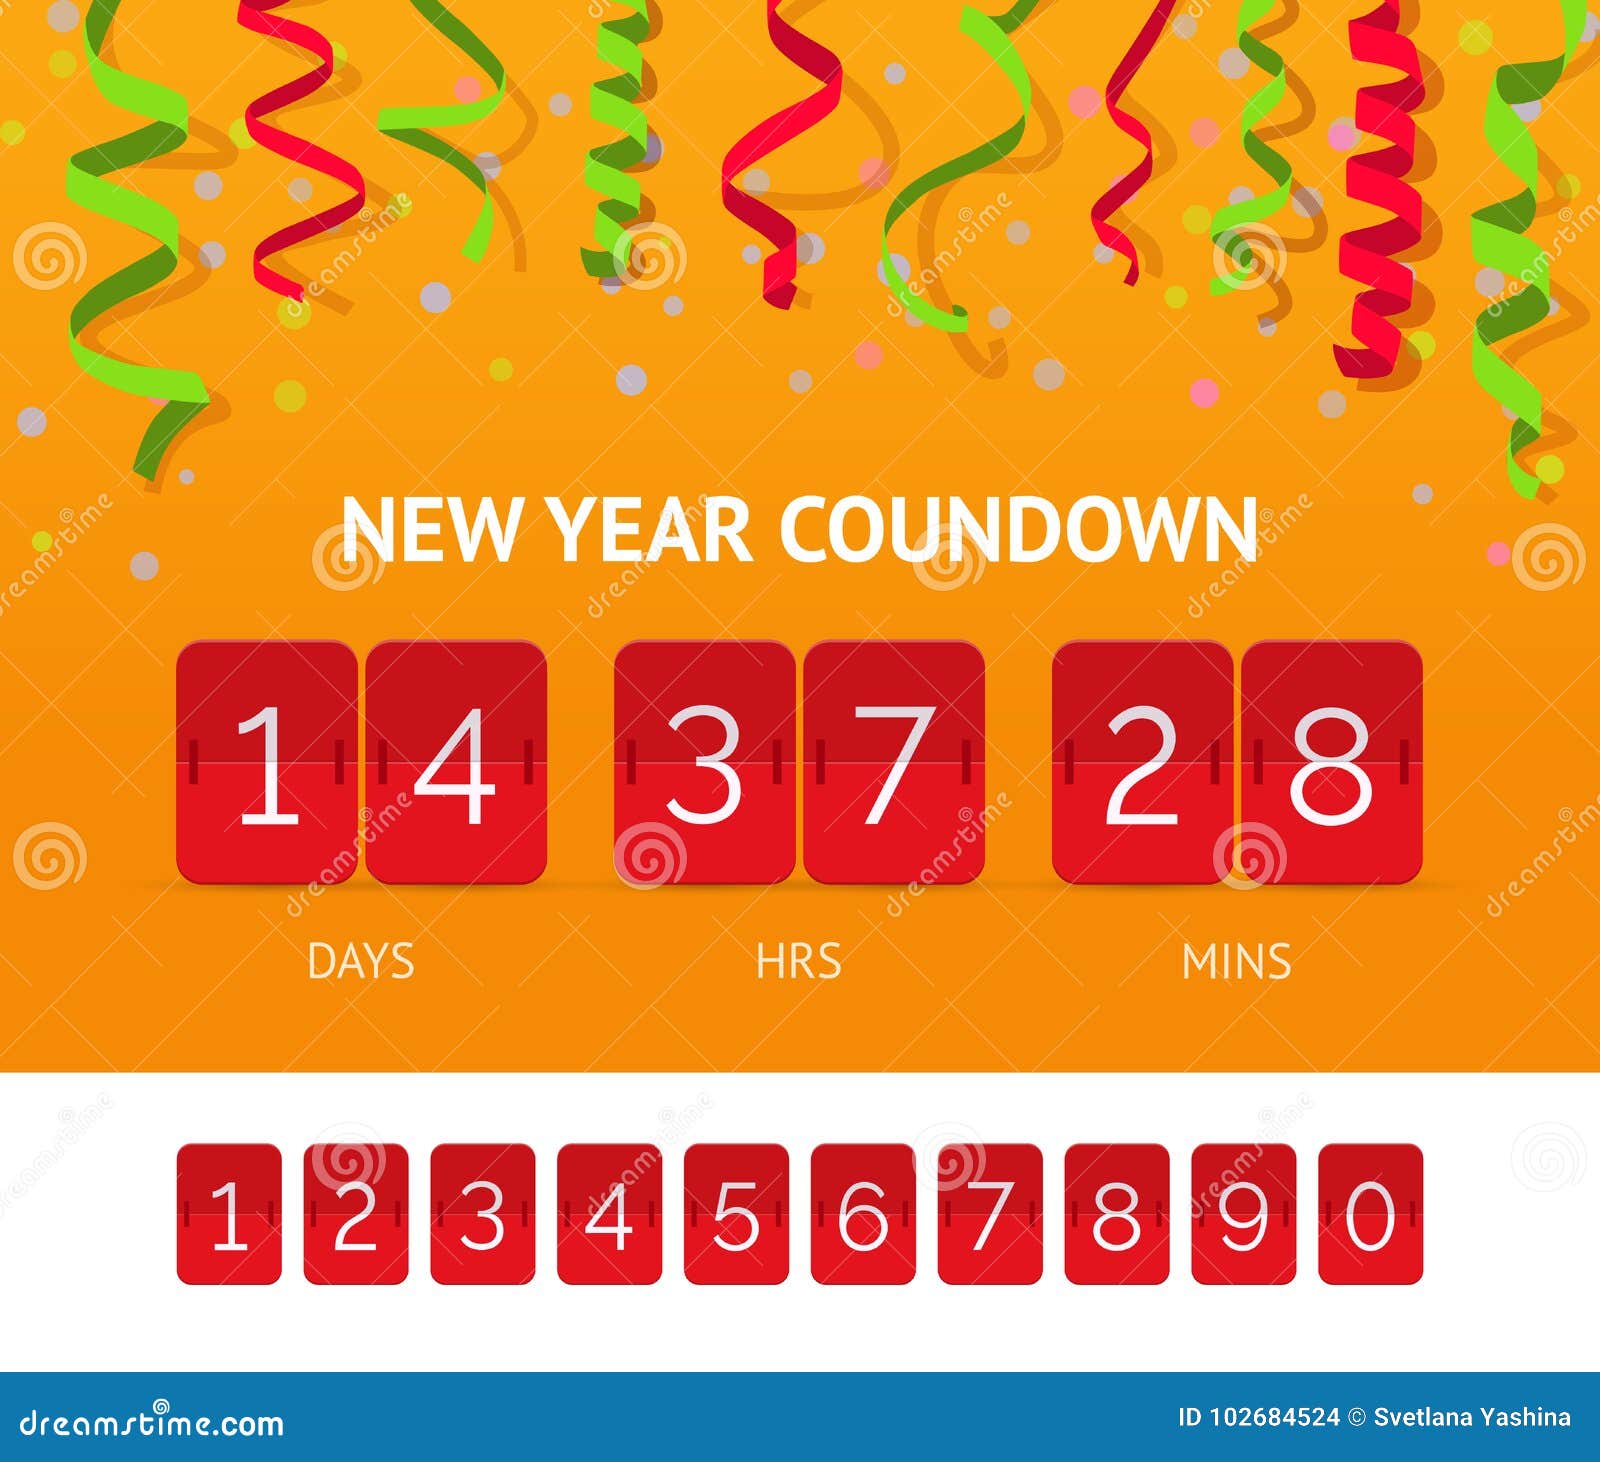 New Year Countdown Vector Banner Stock Vector Illustration Of Scoreboard Date 102684524